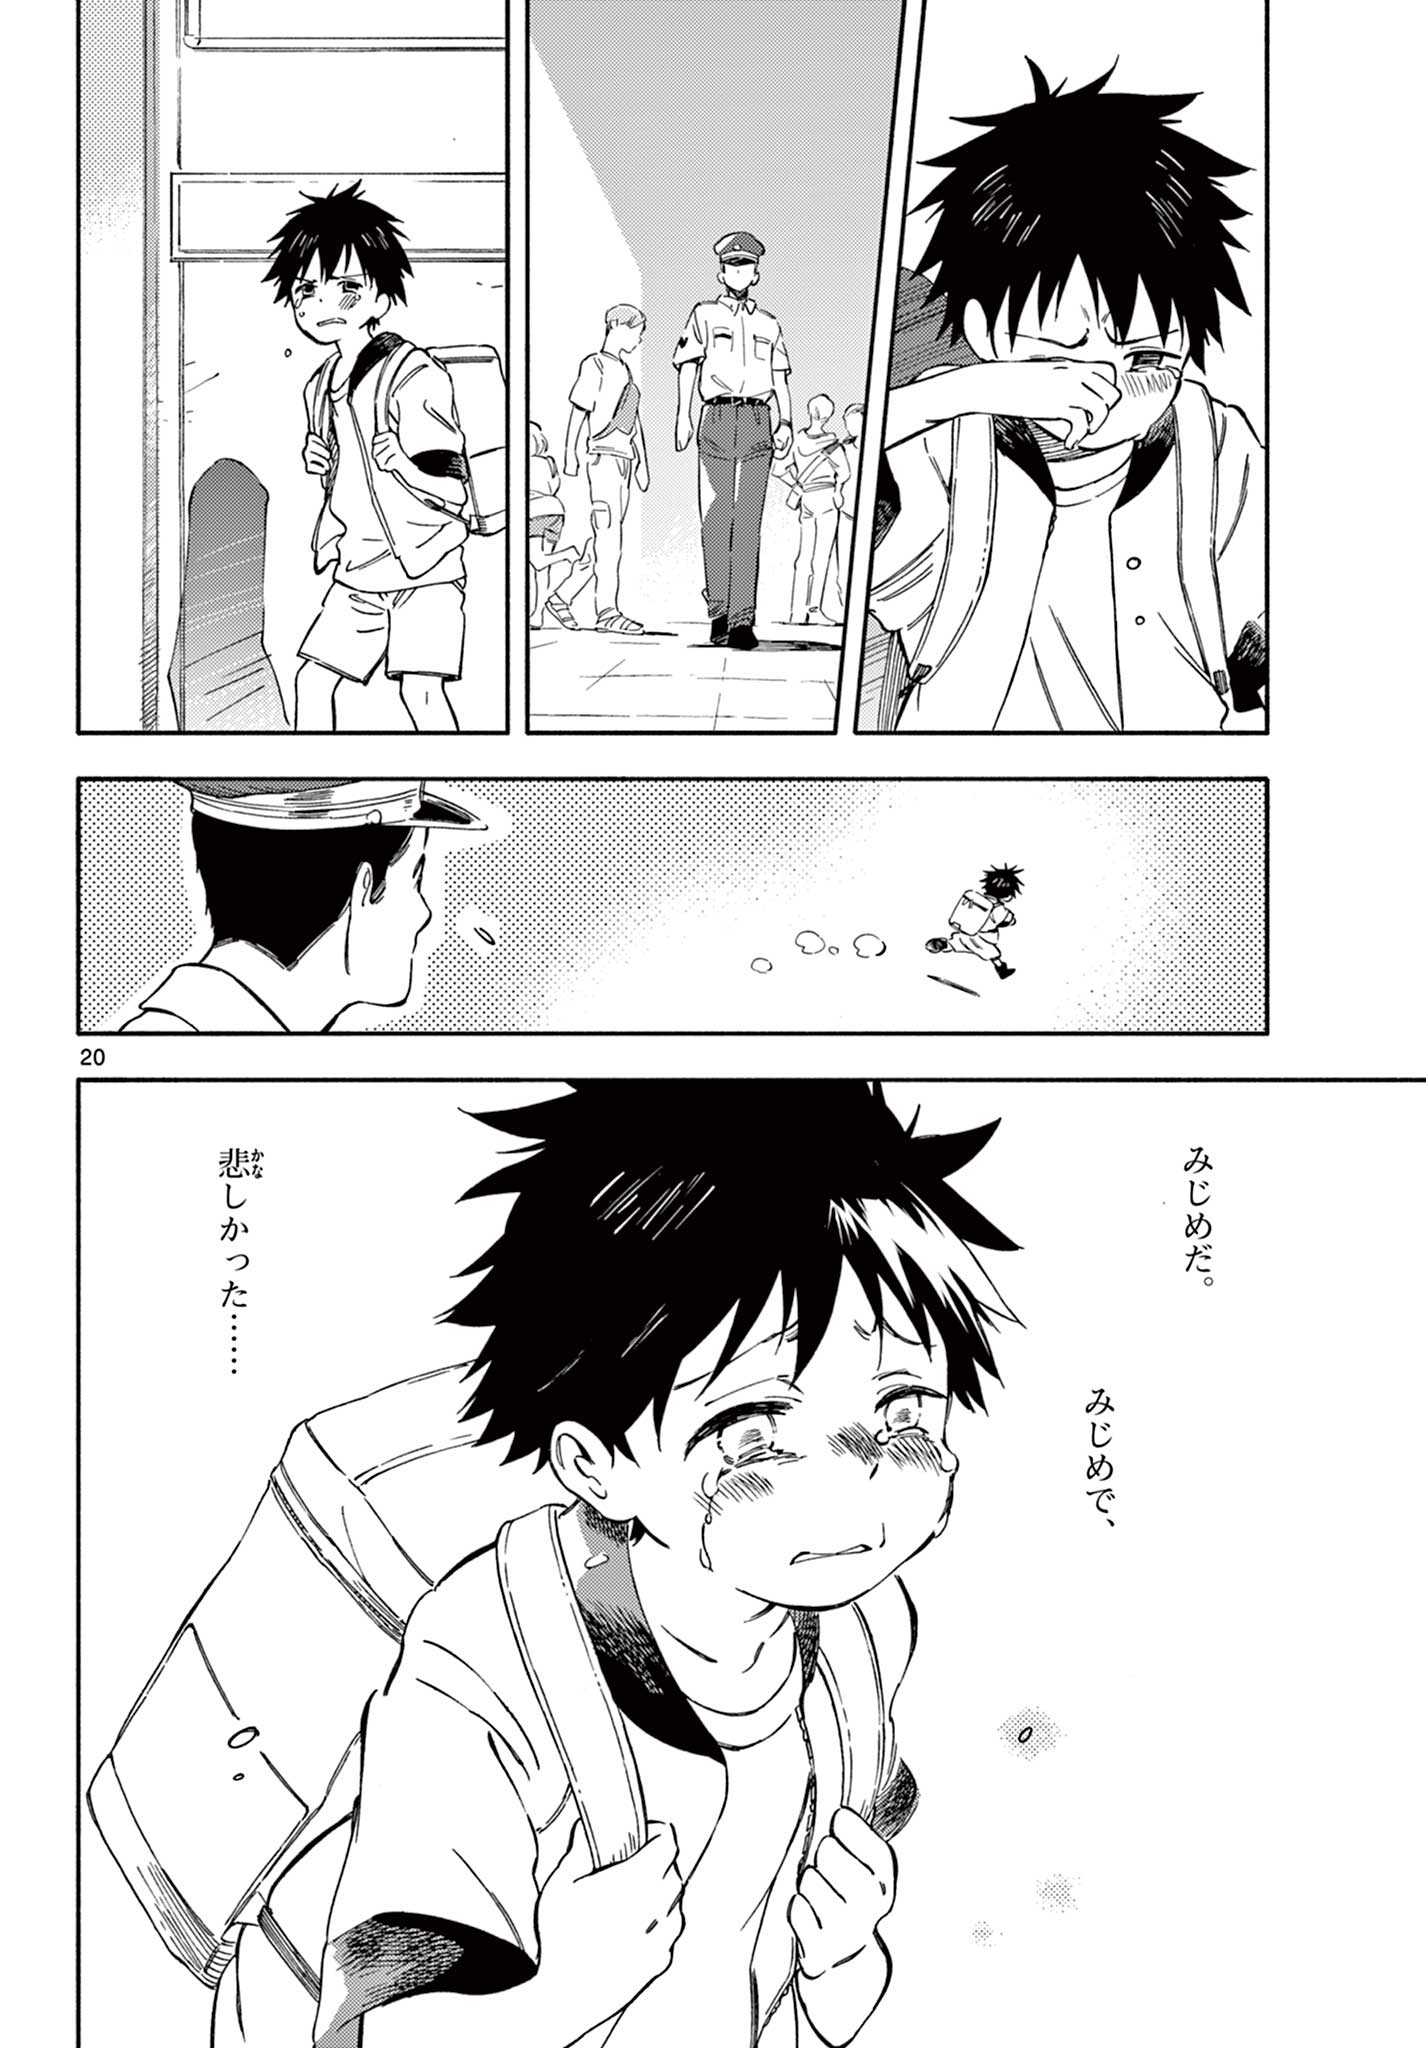 Nami no Shijima no Horizont - Chapter 13.1-2 - Page 8